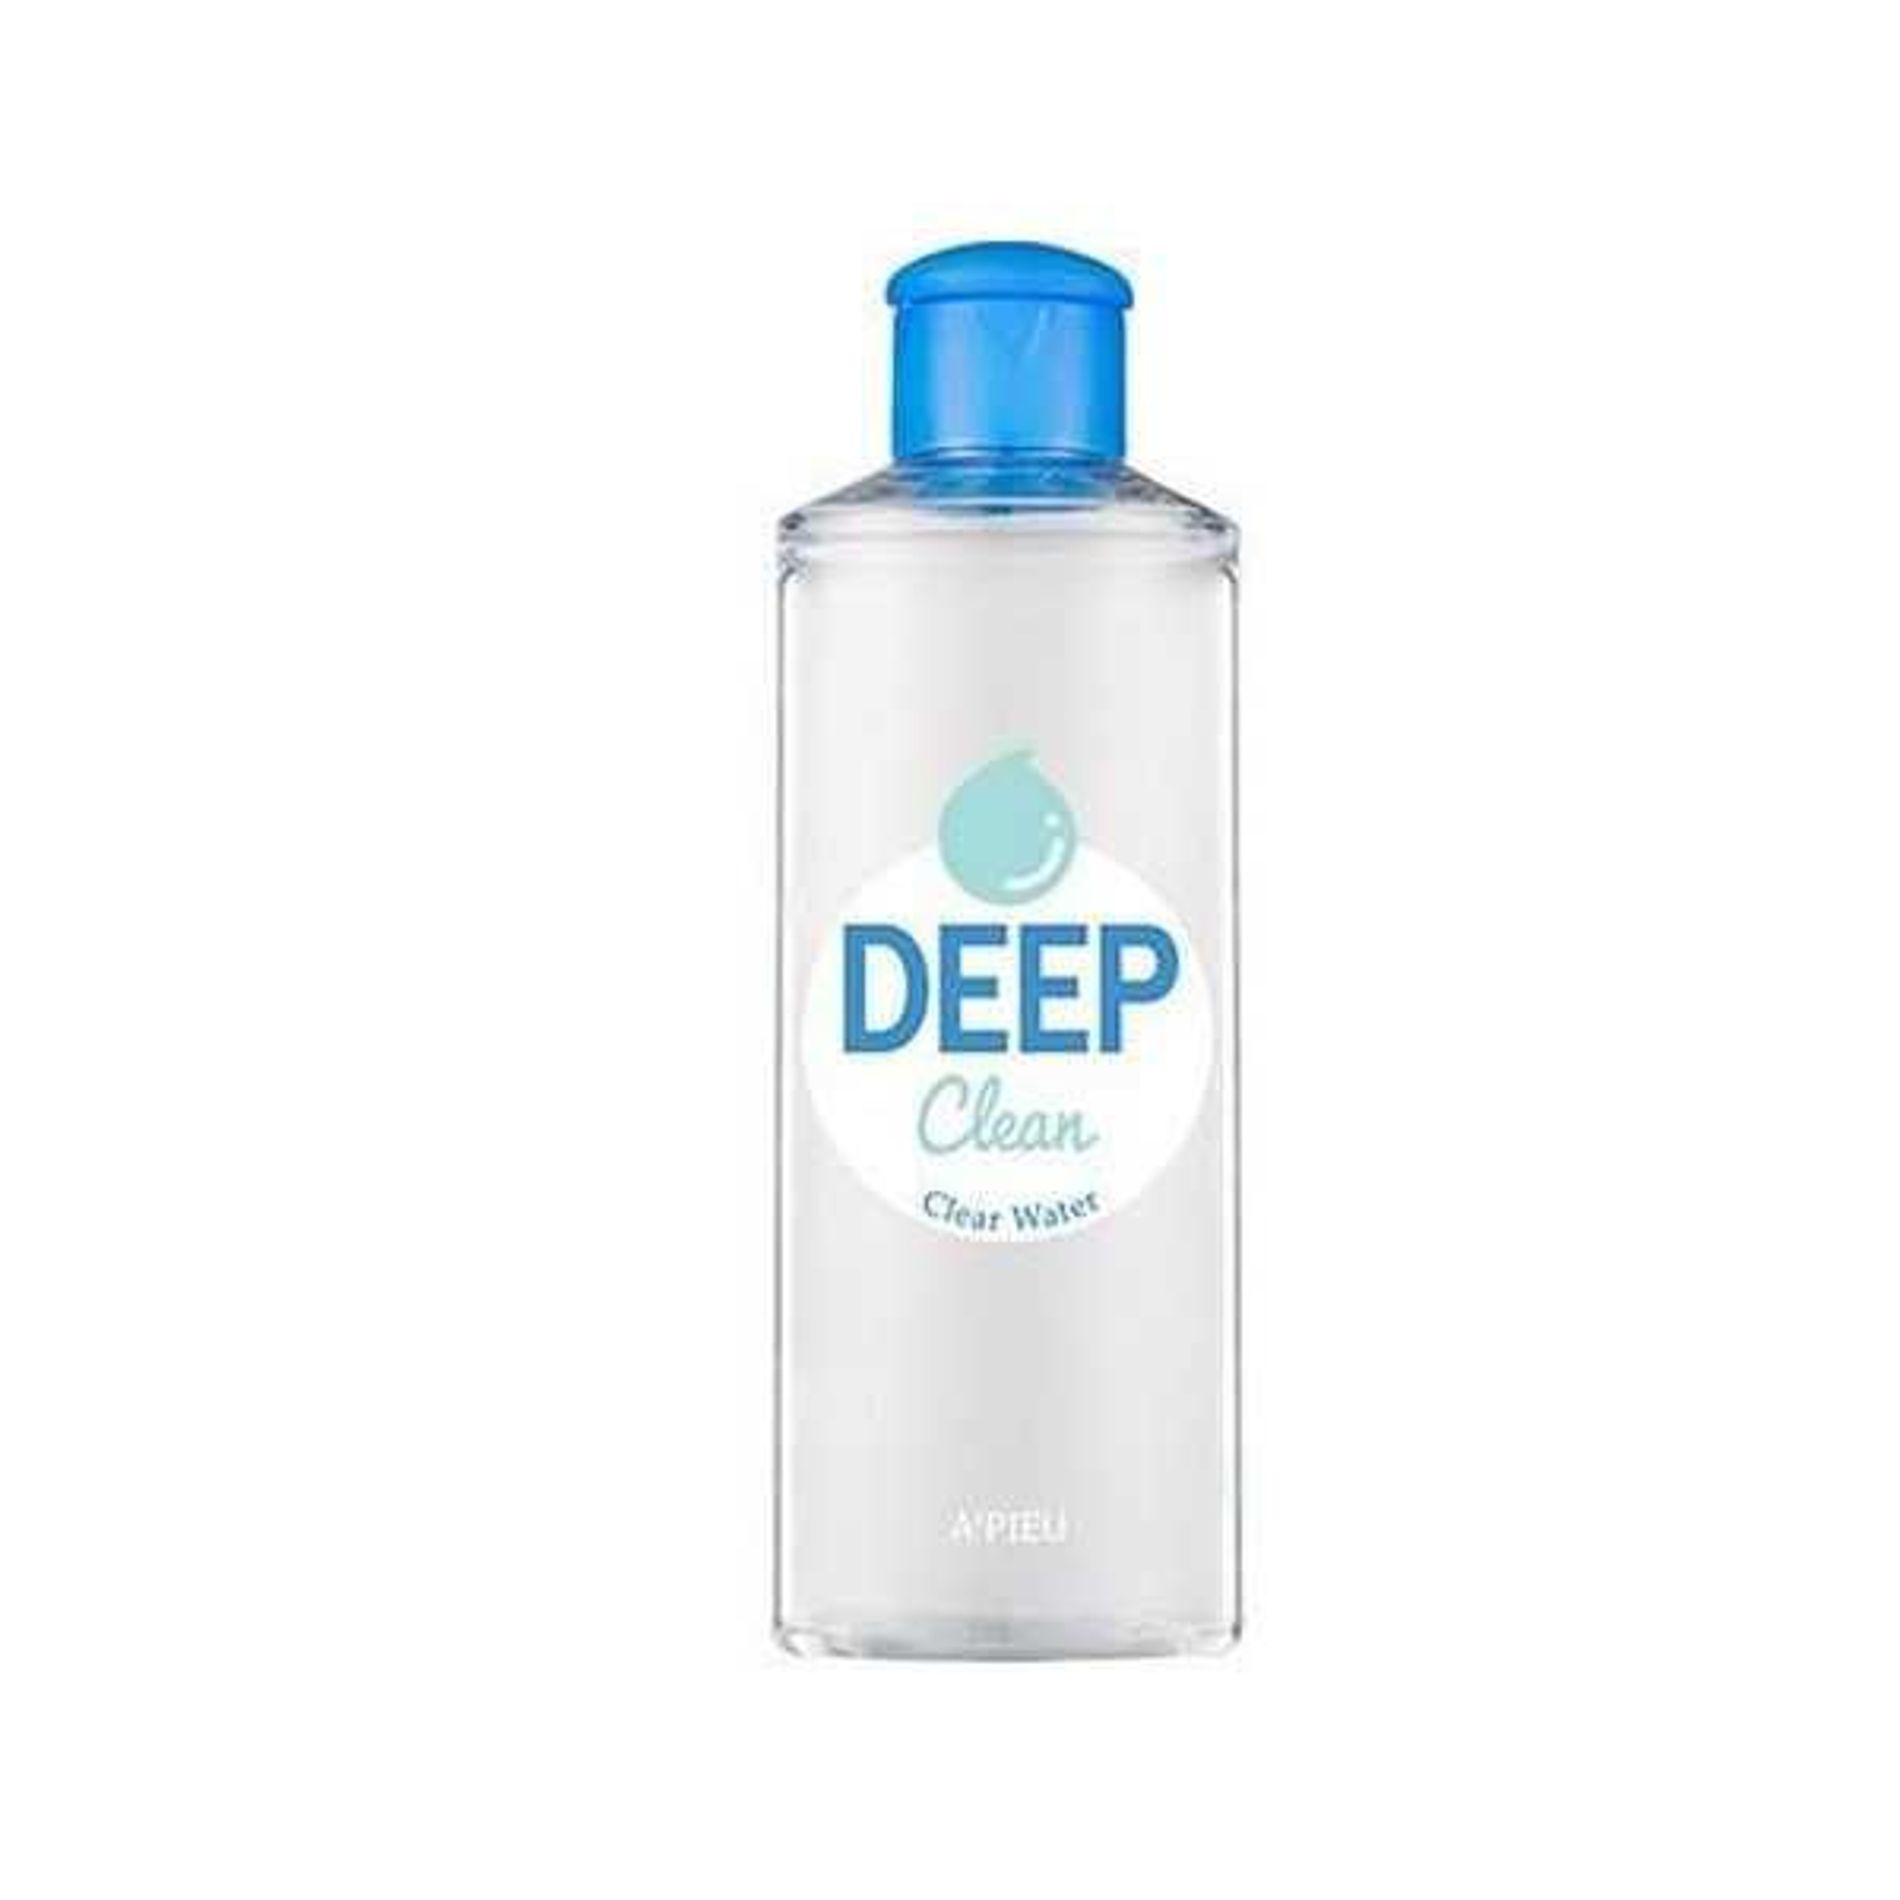 nuoc-tay-trang-a-pieu-deep-clean-clear-water-165ml-2